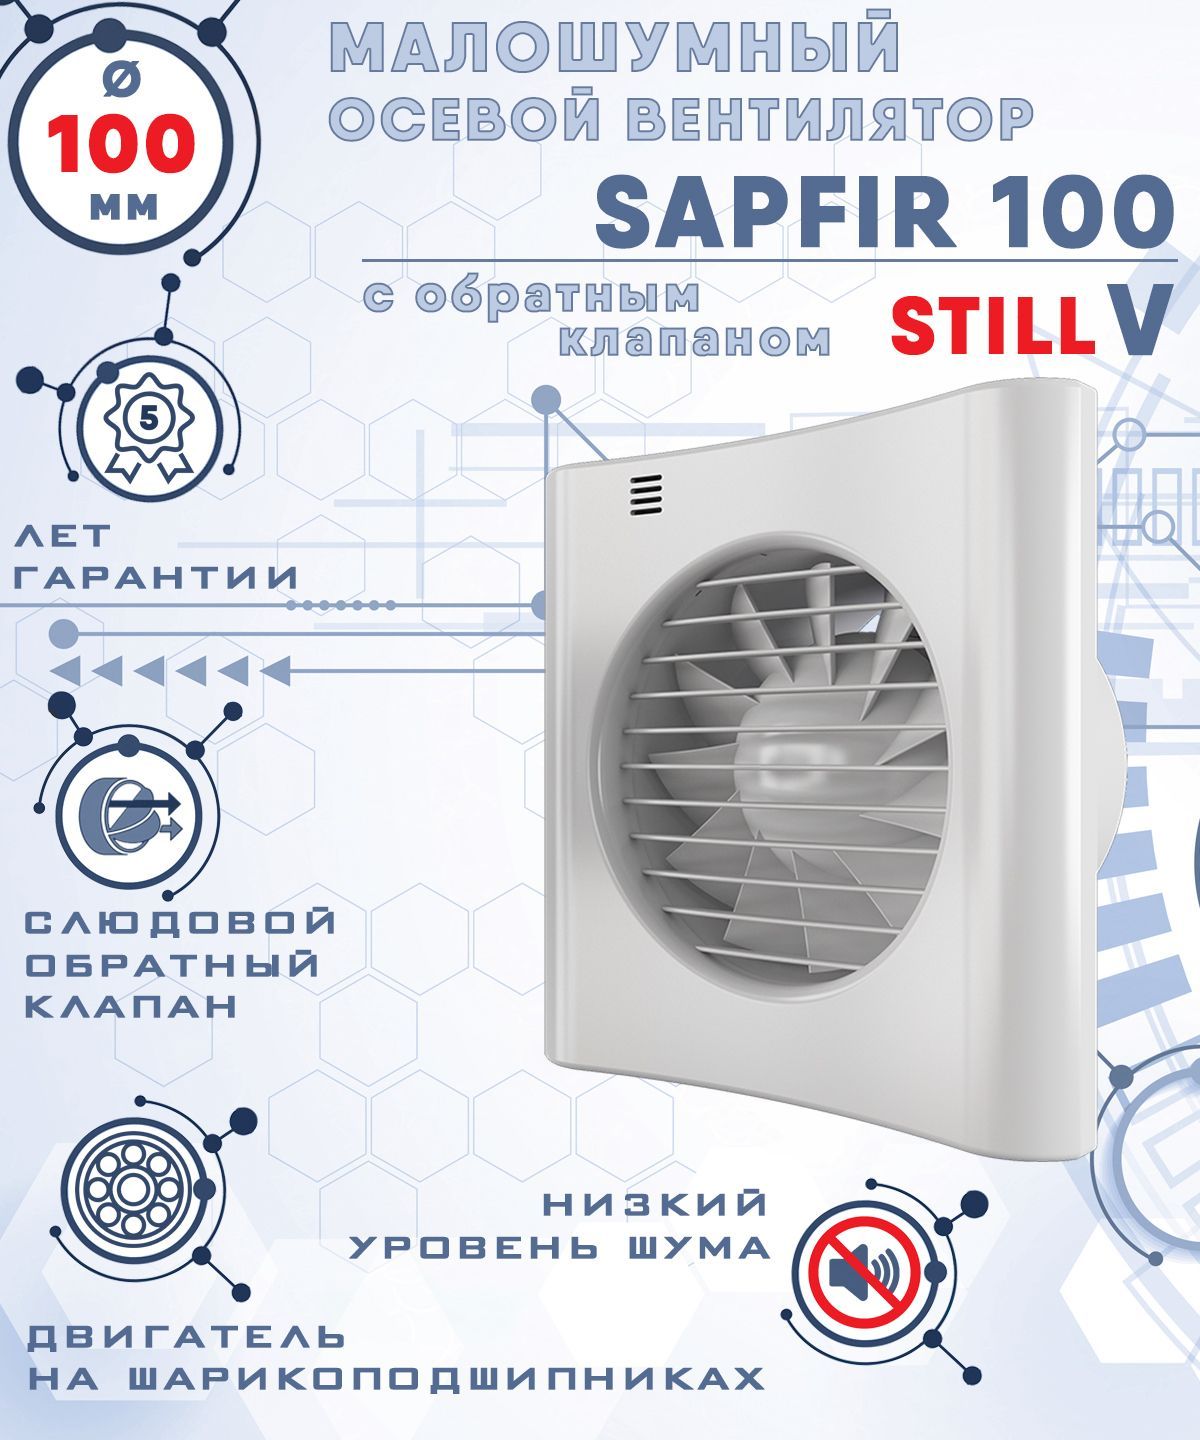 SAPFIR 100 STILL V вентилятор вытяжной диаметр 100 мм ZERNBERG осевой вытяжной вентилятор виенто с обратным клапаном малошумный 100ск still